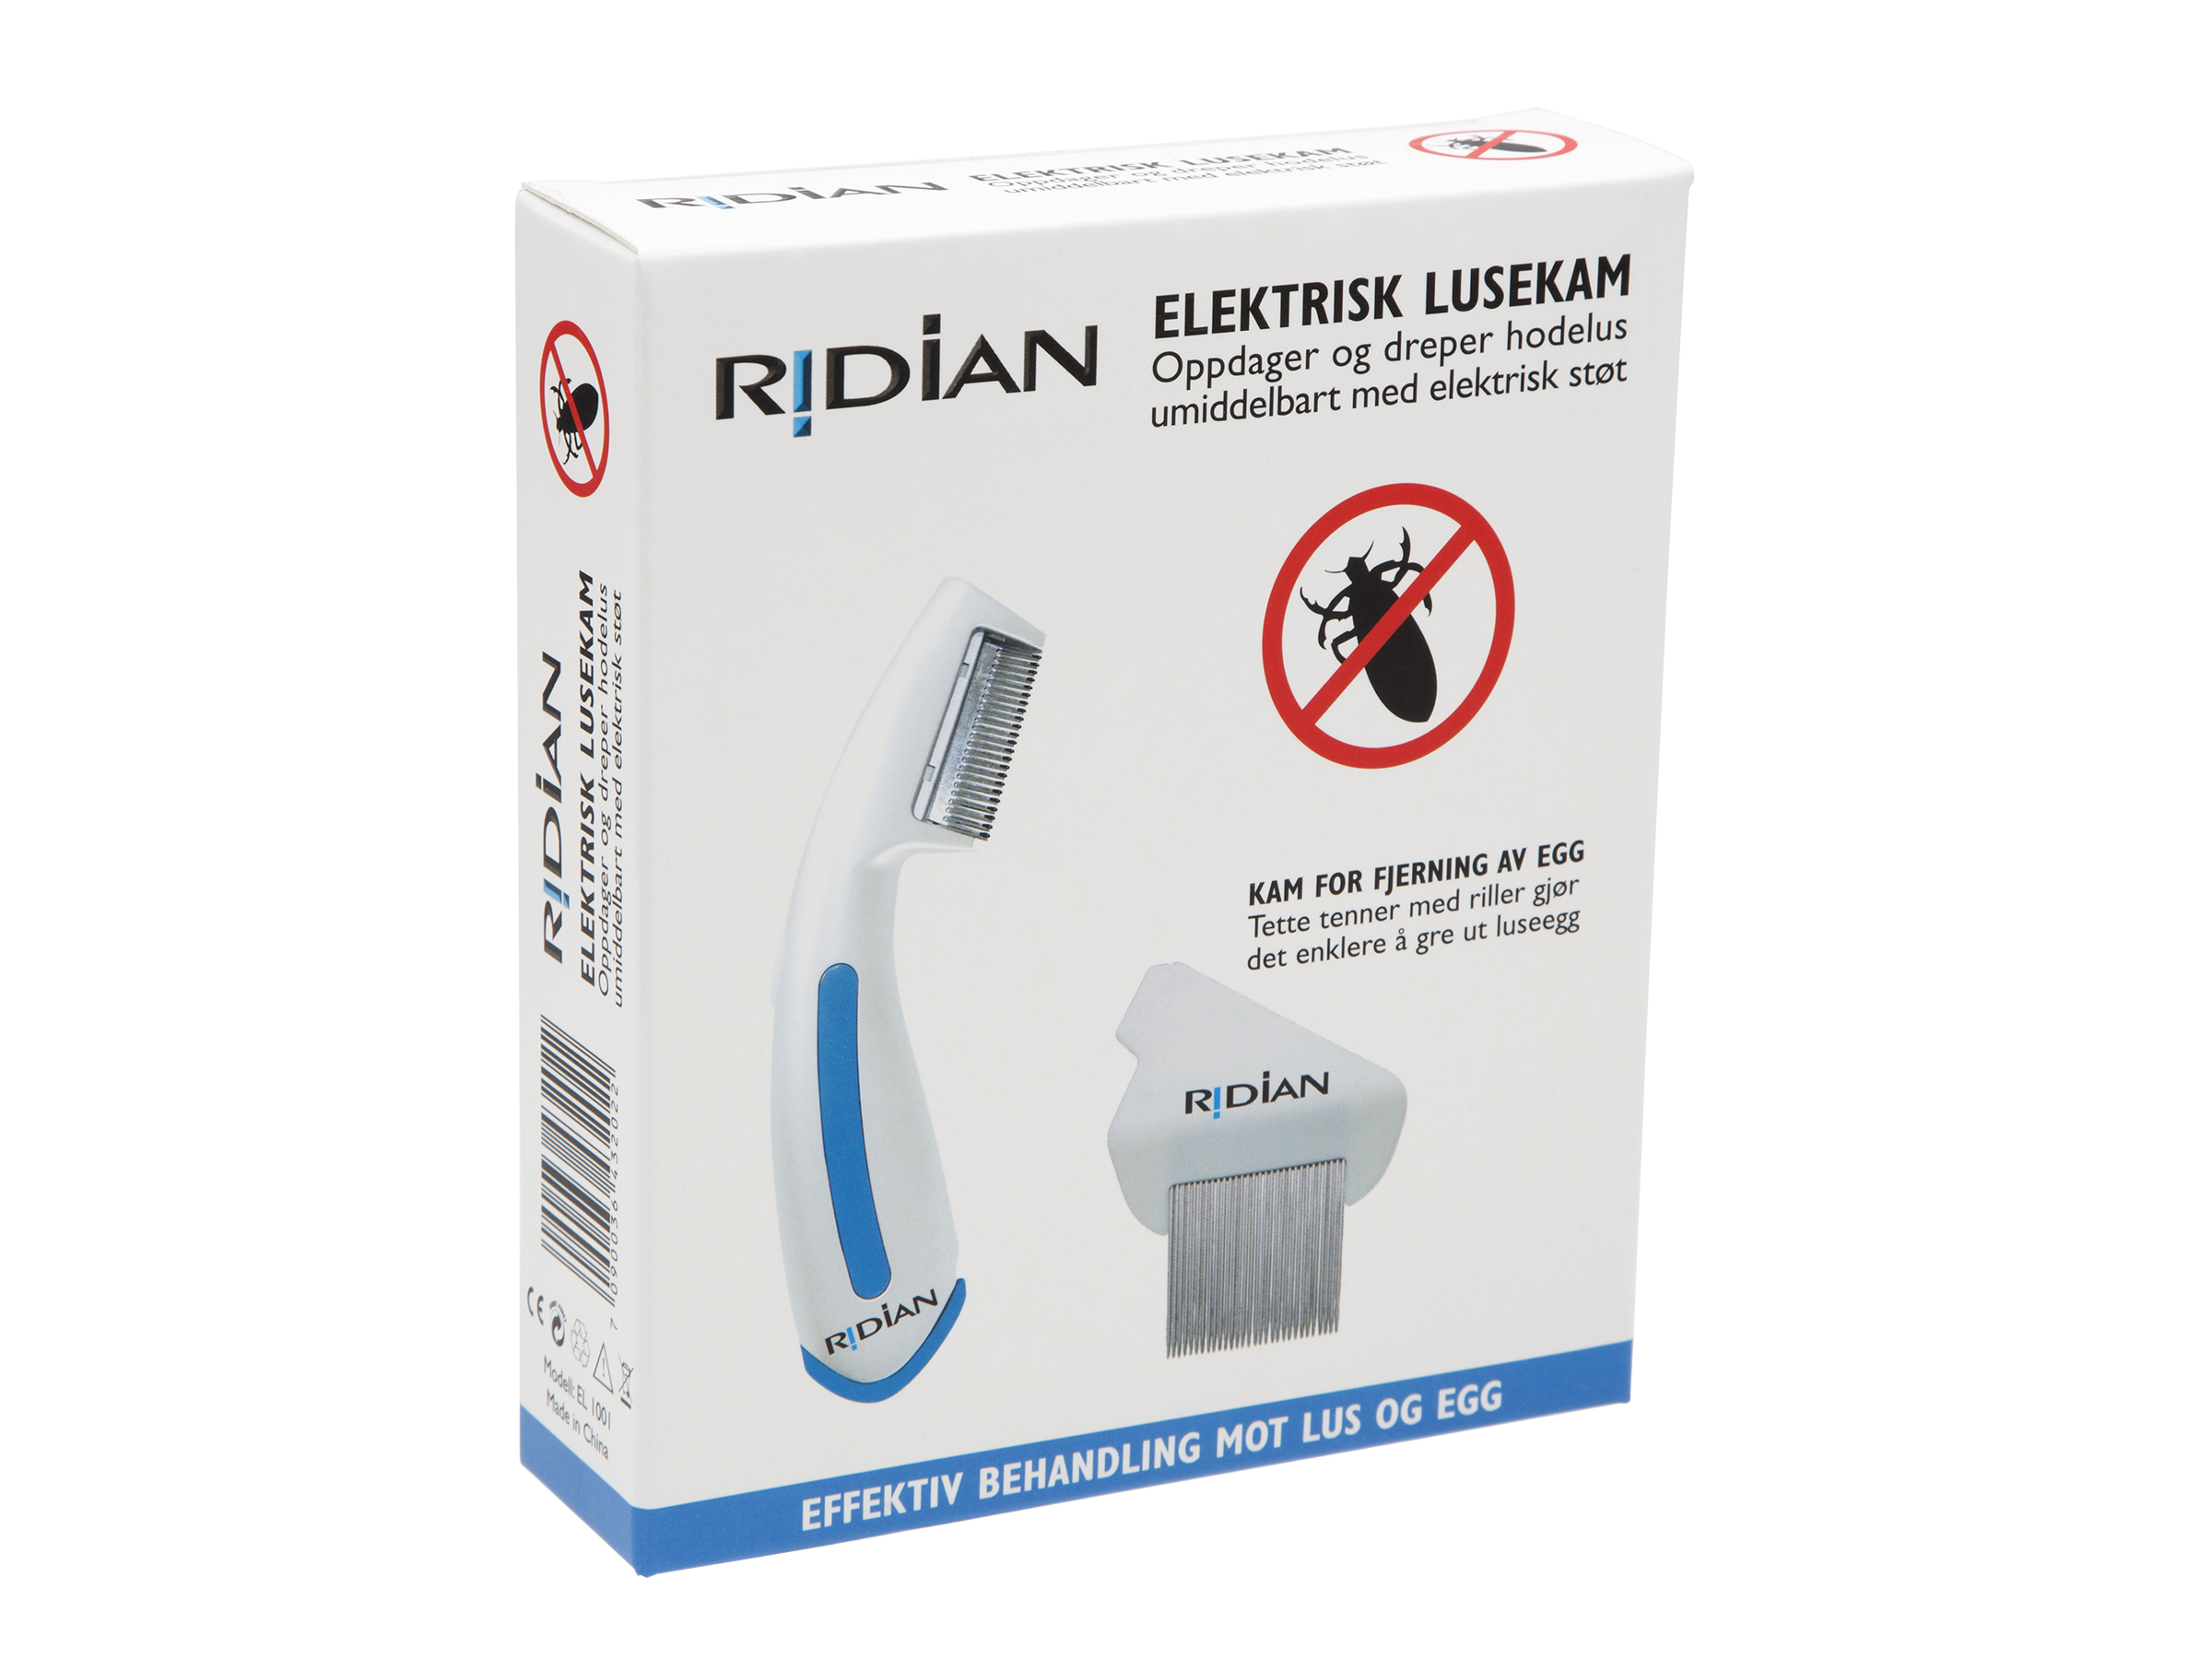 Ridian Radian elektrisk lusekam, 1 stk.